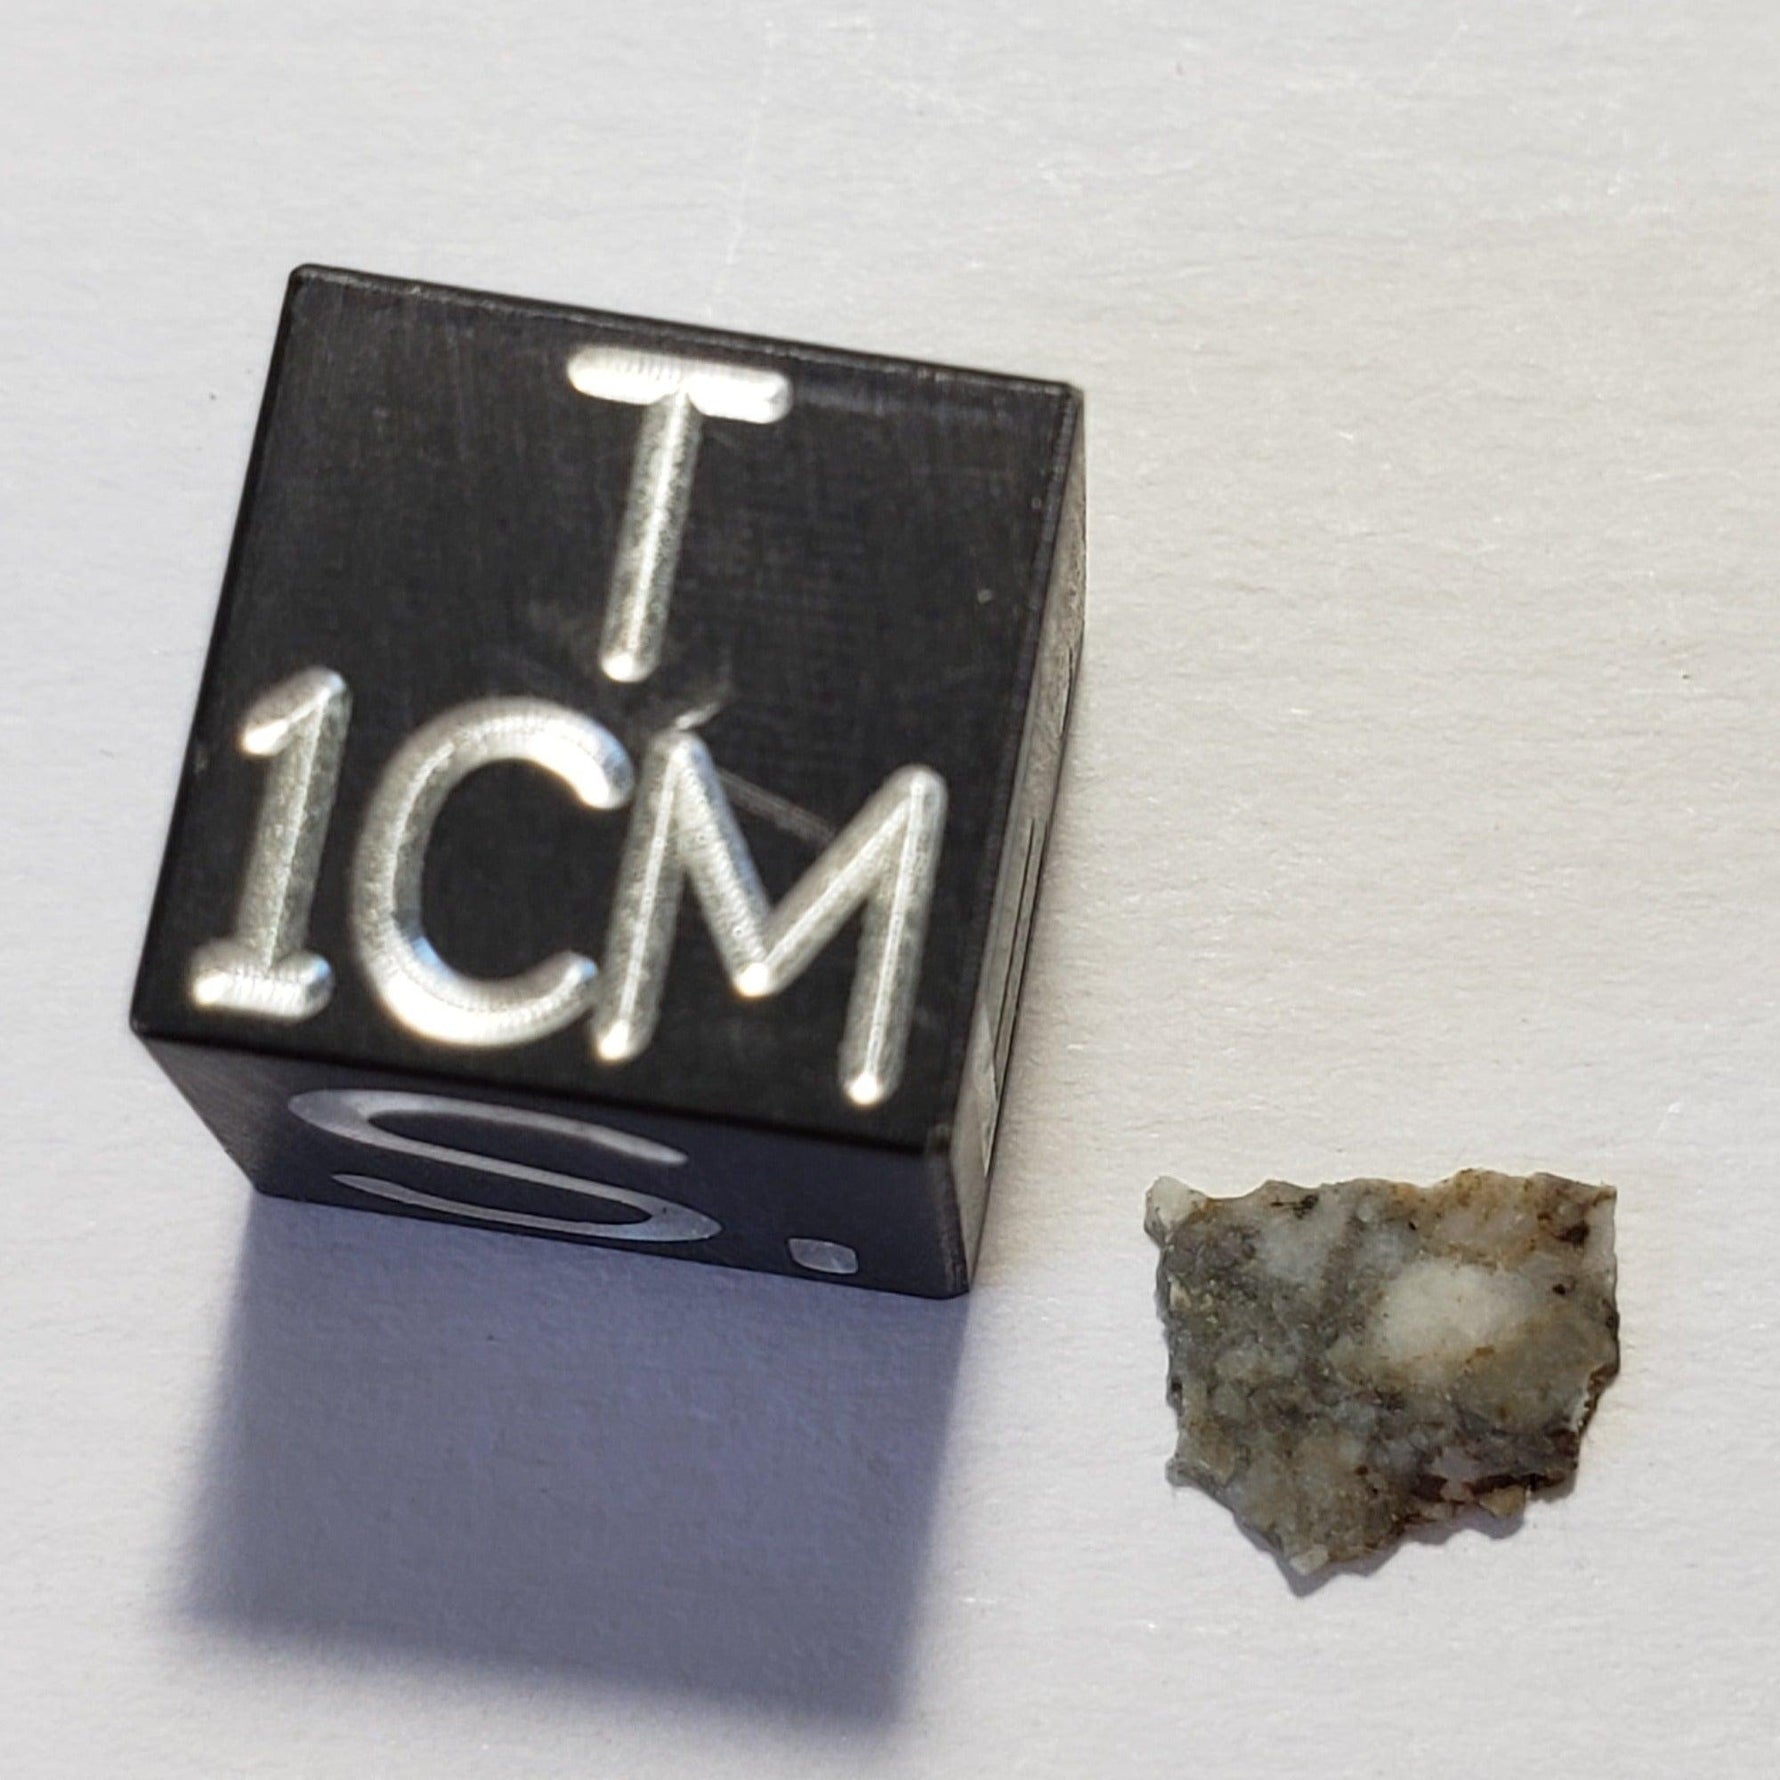 Dhofar 1085 Meteorite | 40 mg | Part Slice | Lunar Impact Melt Breccia | Moon Rock | Low TKW